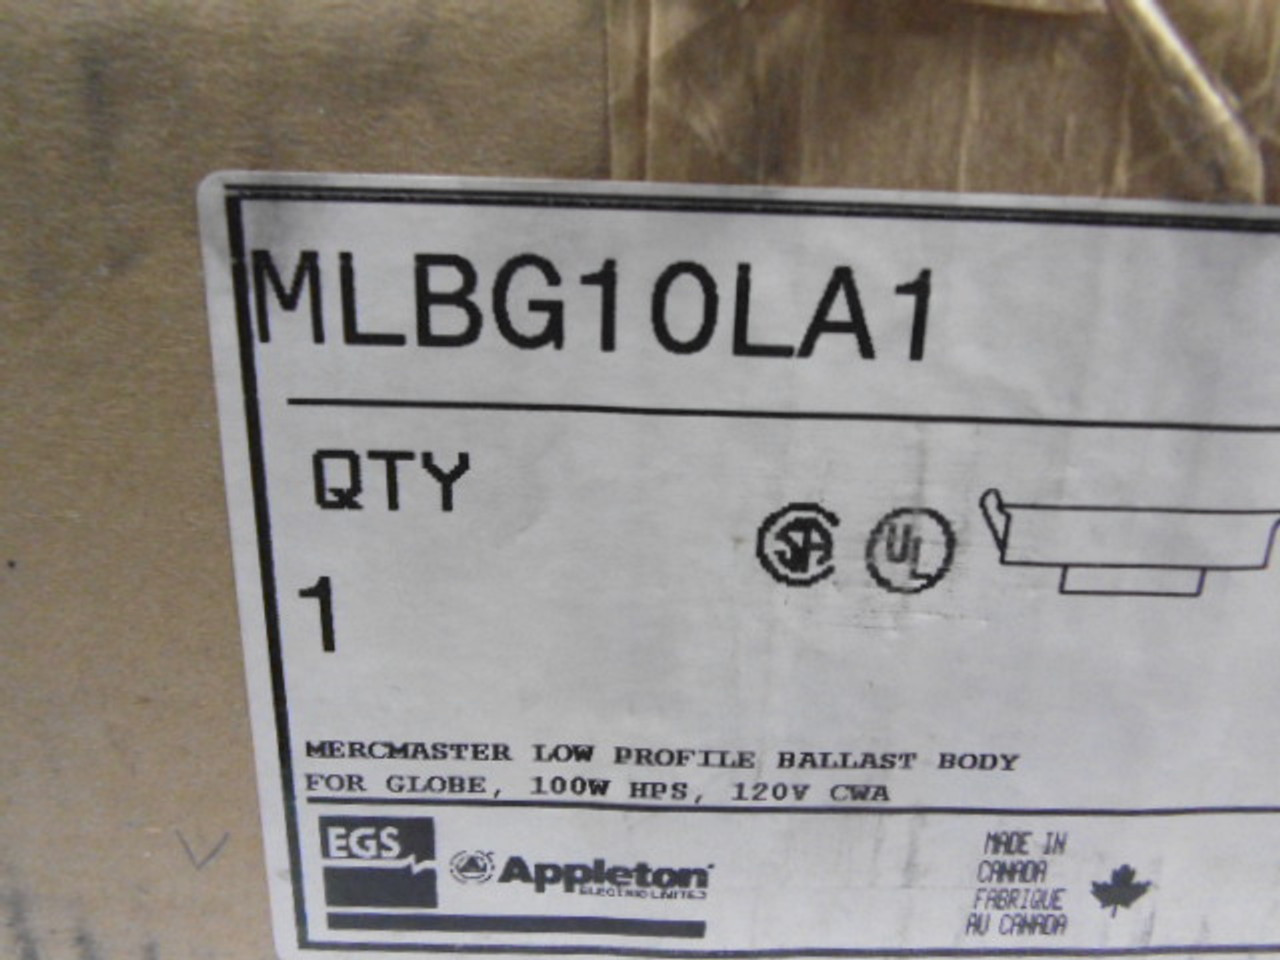 Appleton MLBG10LA1 Mercmaster Low Profile Ballast body 100W Hps 120V ! NEW !